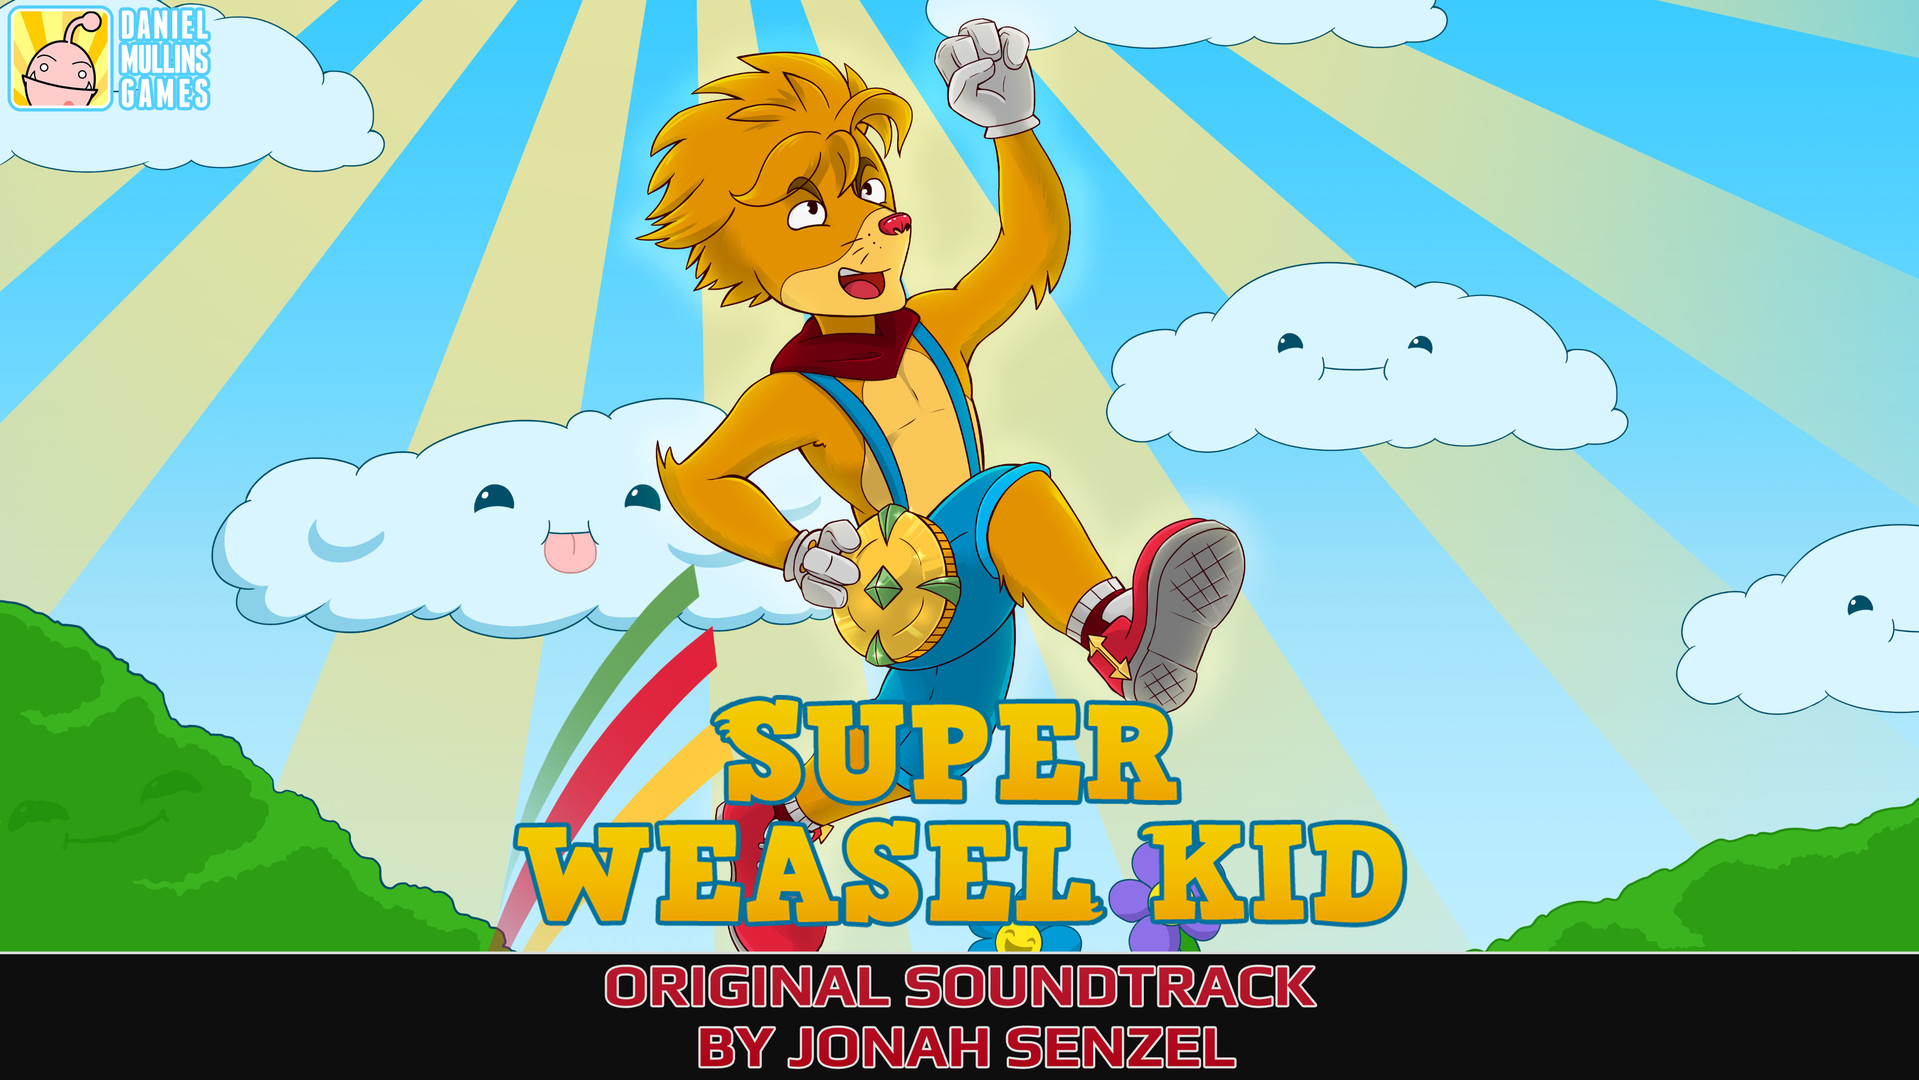 The Hex - "Super Weasel Kid" Original Soundtrack Featured Screenshot #1